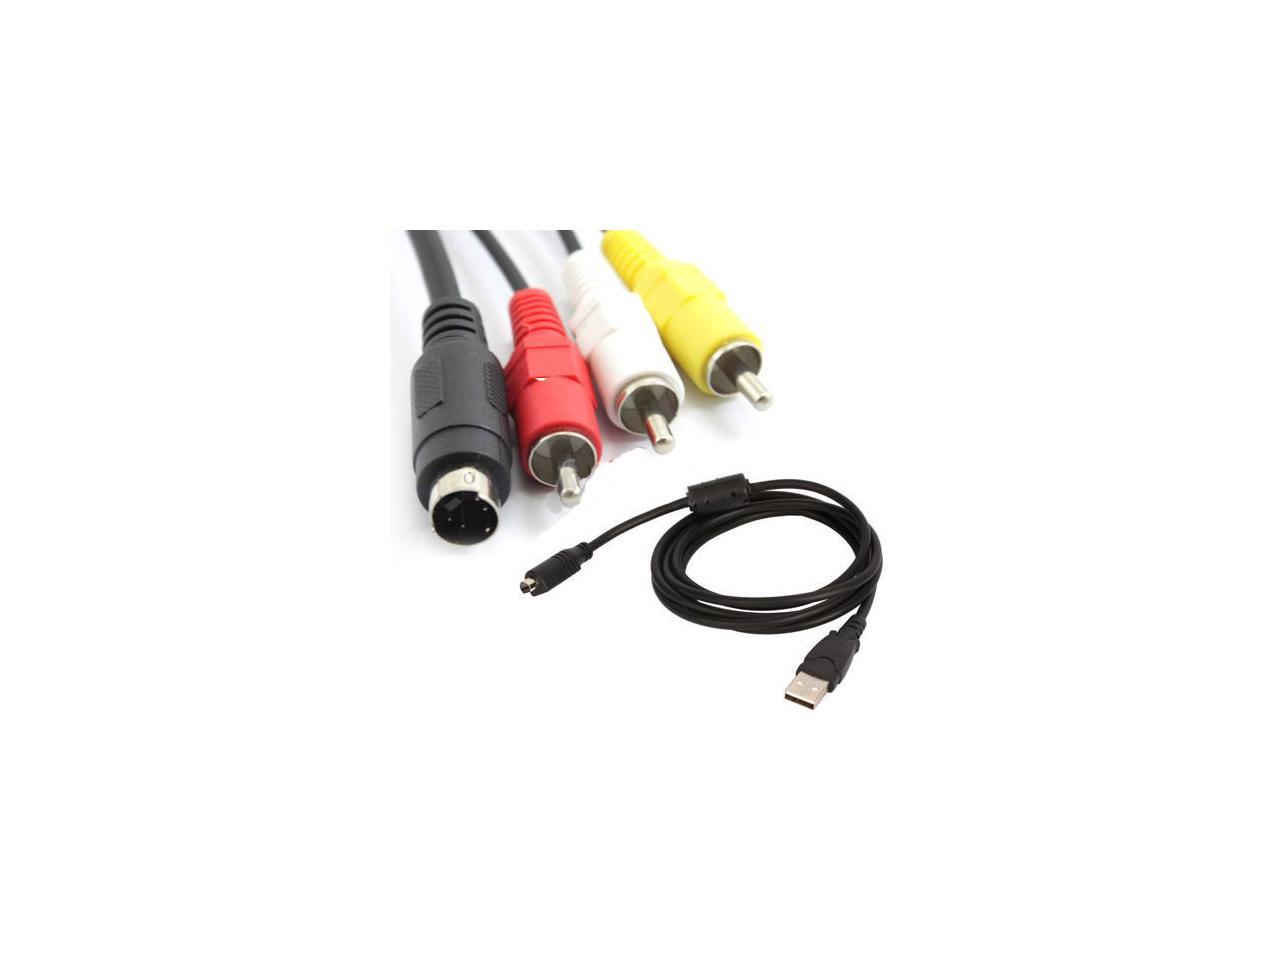 USB Cable Cord for Sony Camcorder Handycam DCR-SR62/e/l/r yan AV A/V TV Video Audio 